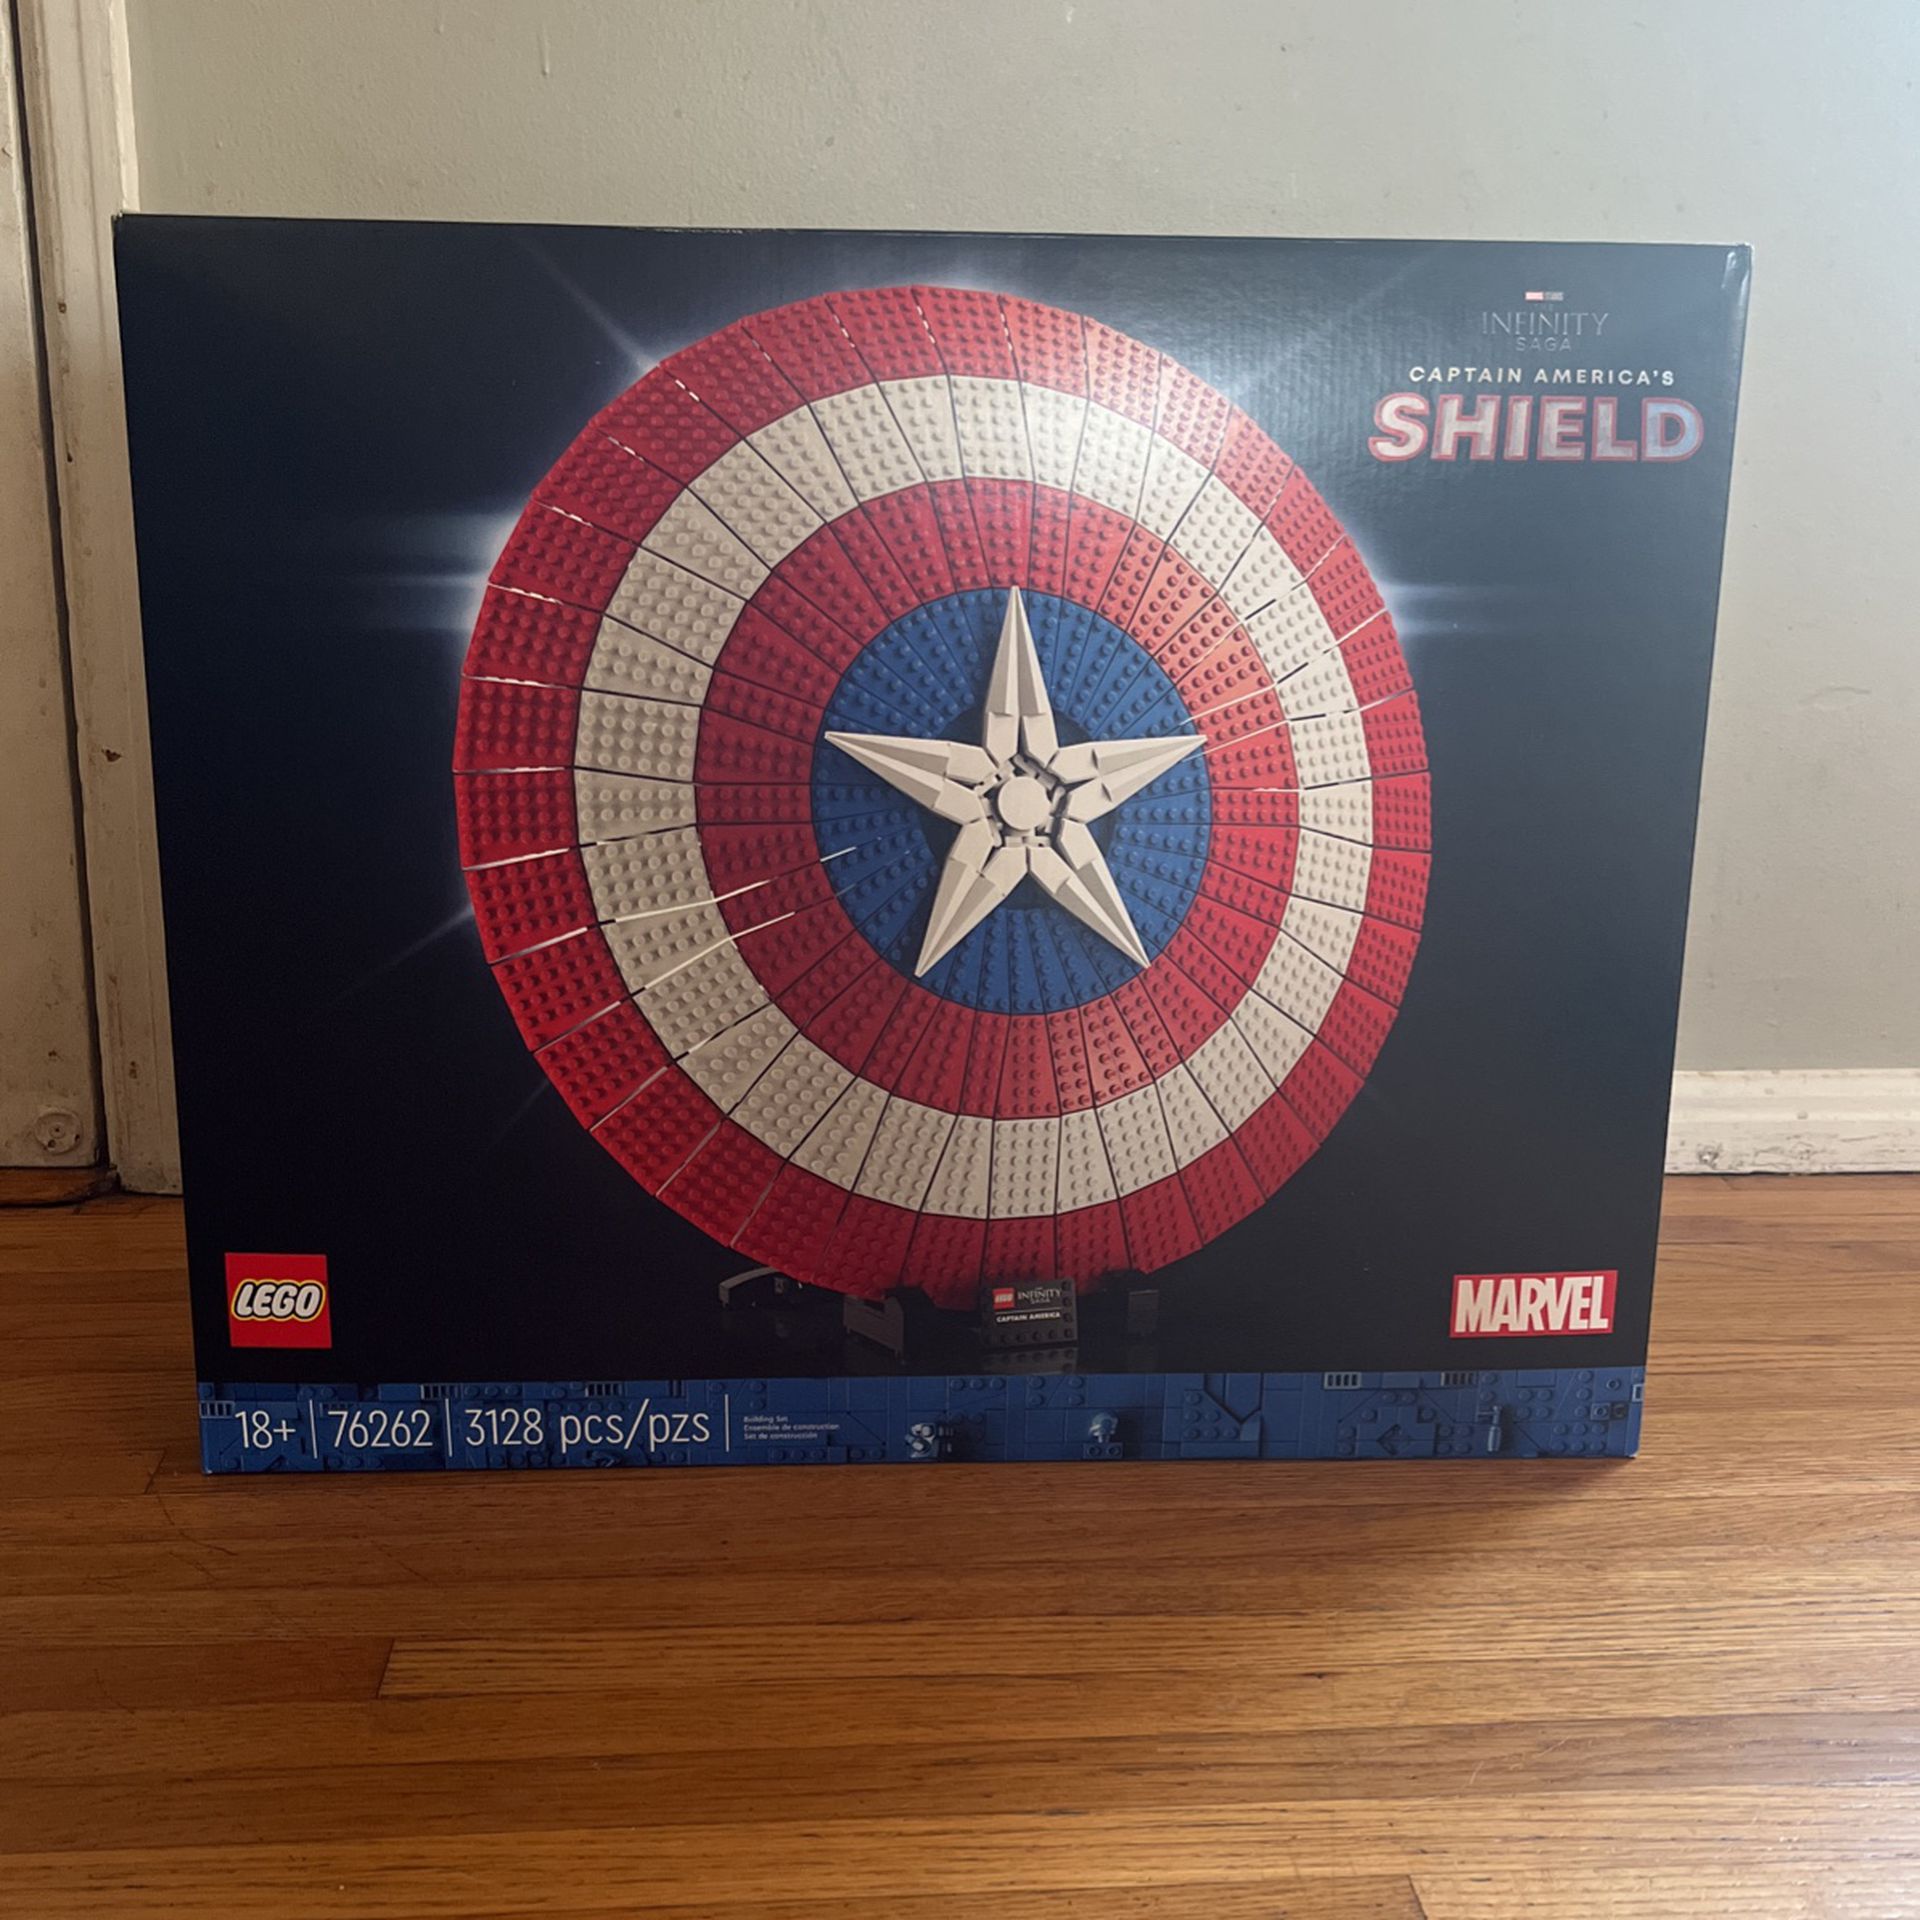 Captain America’s Shield Lego Set